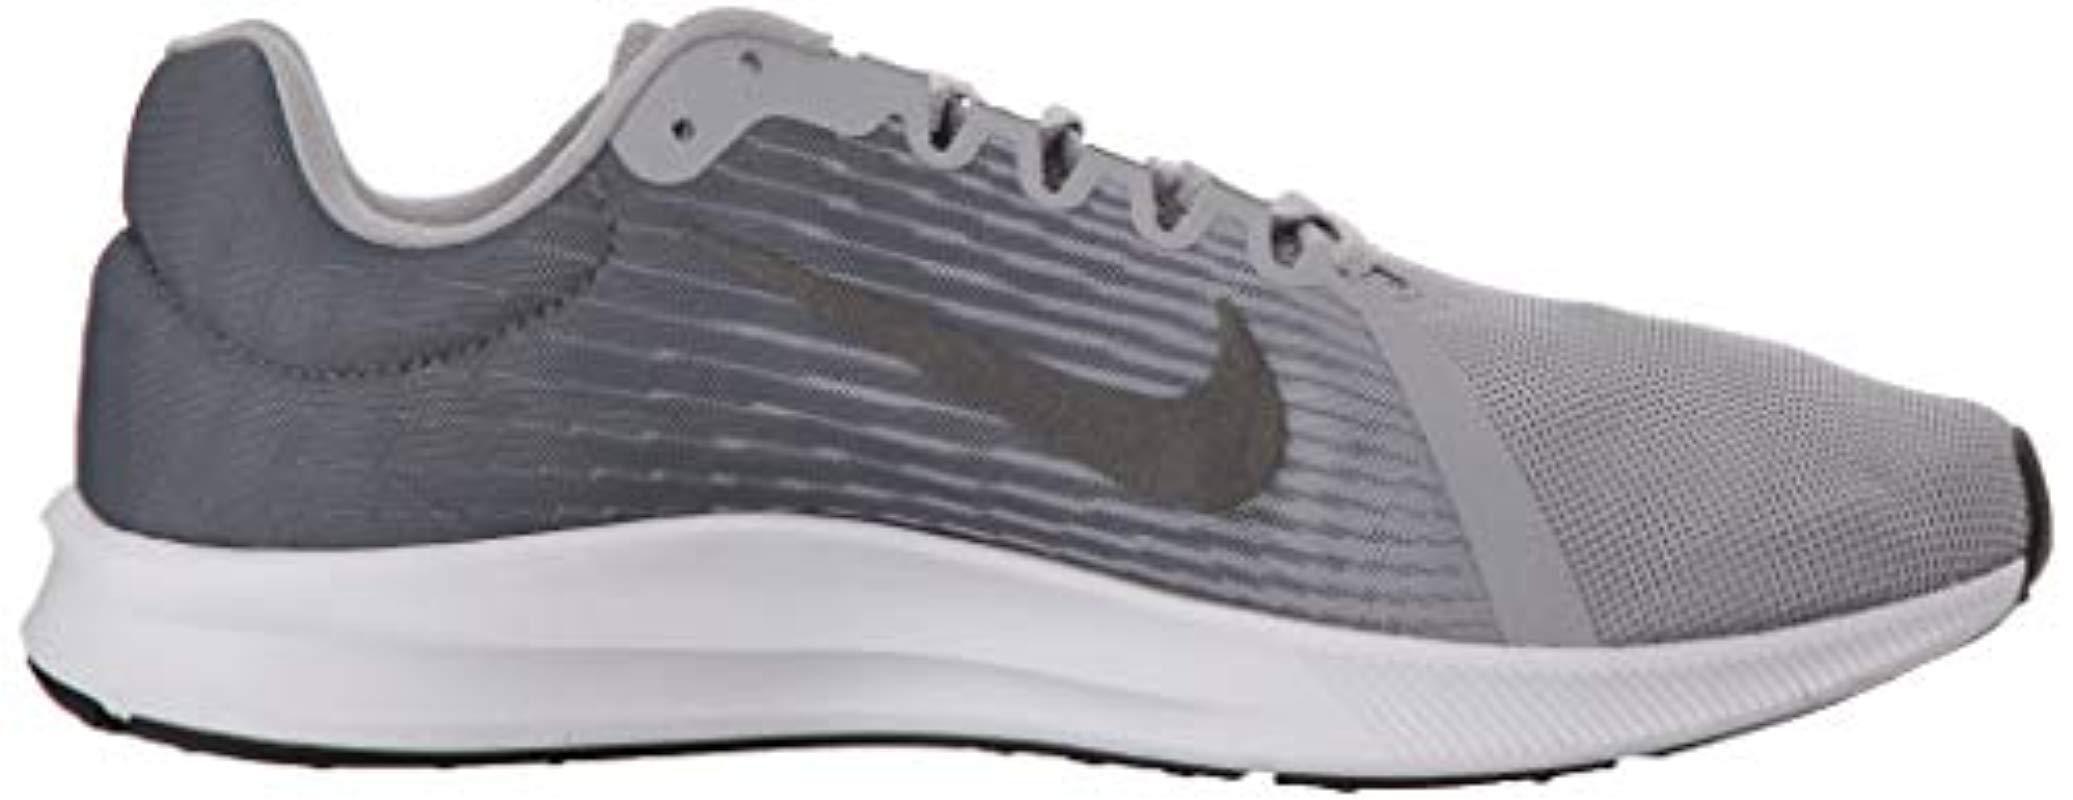 Lyst - Nike Downshifter 8 Running Shoe, Wolf Metallic Dark Cool Grey, 6 ...